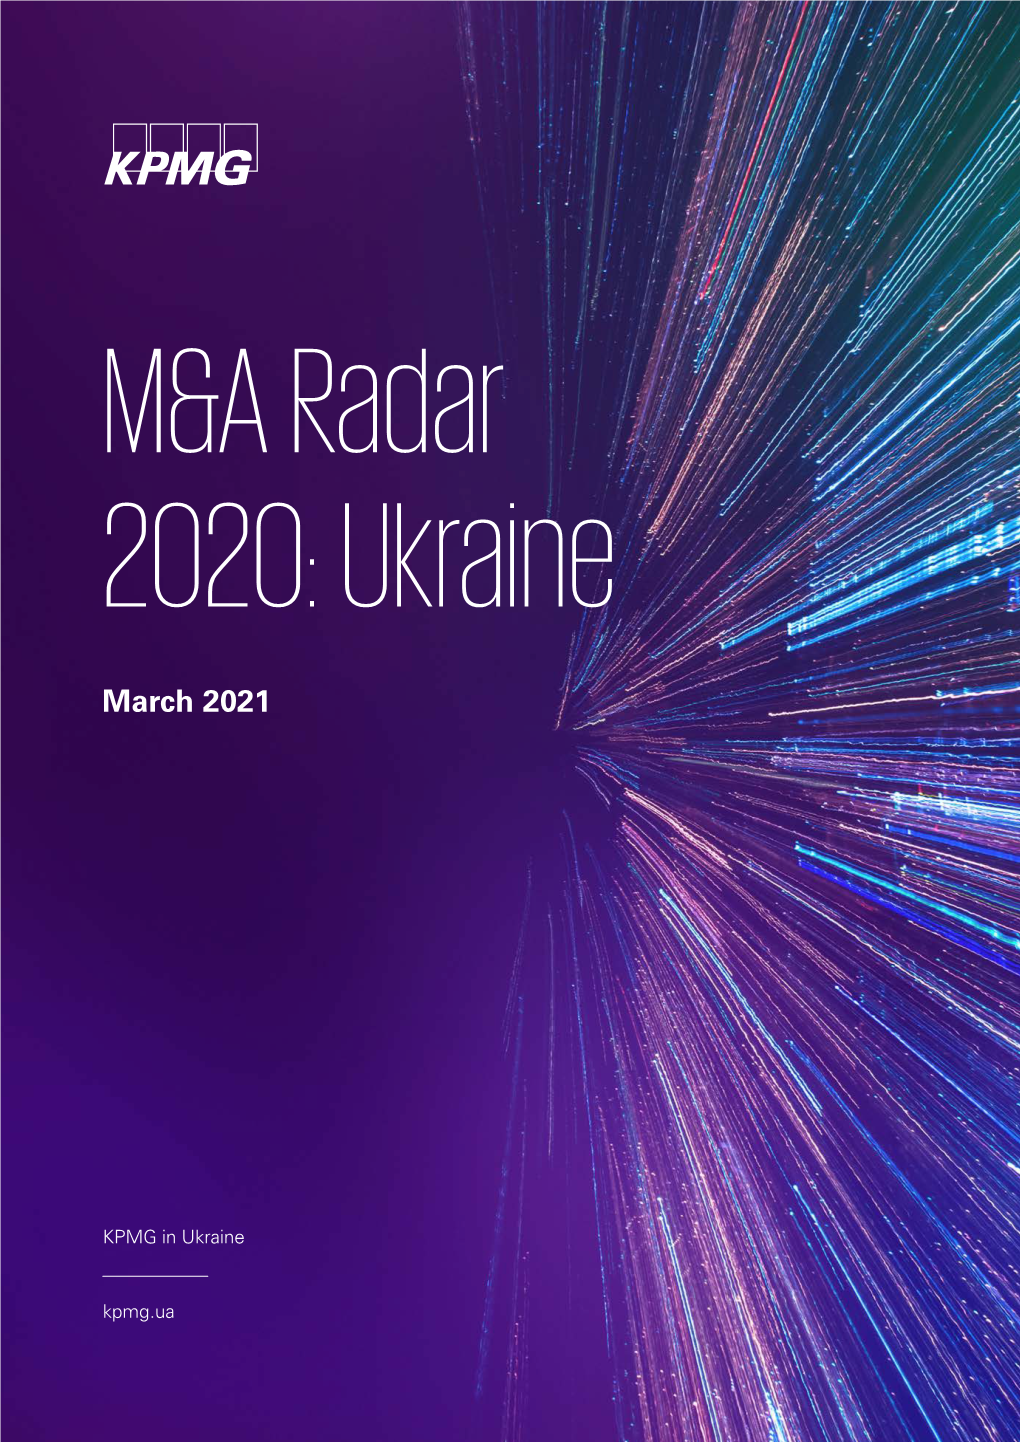 M&A Radar 2020: Ukraine